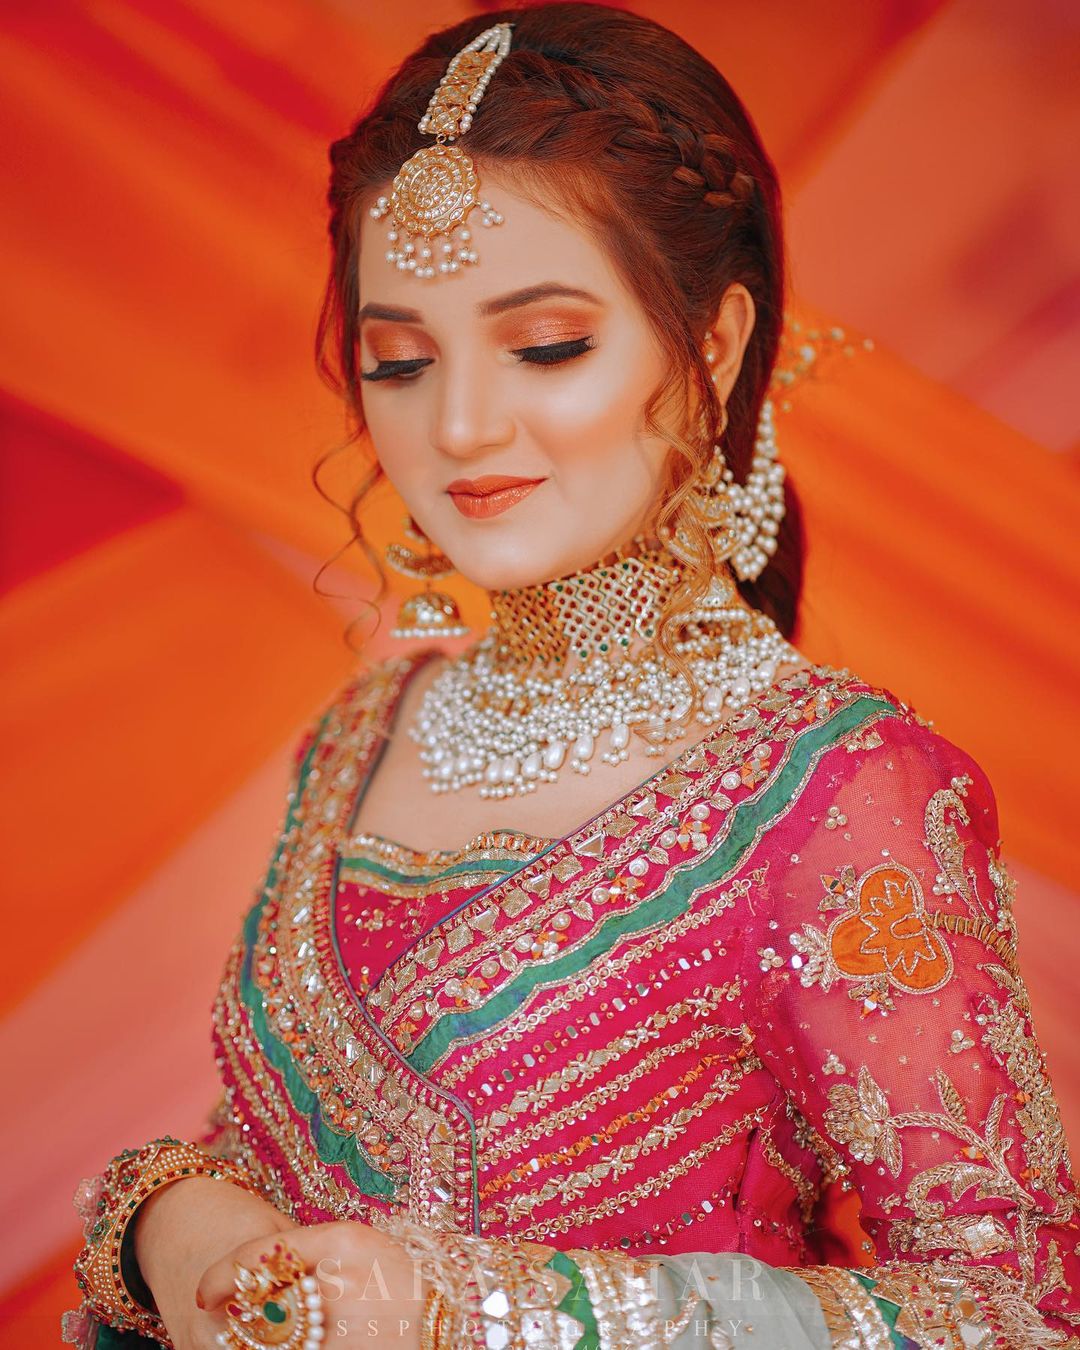 Tik Tok Star Rabeeca Khan Looks Vibrant In Her Latest Bridal Shoot ...